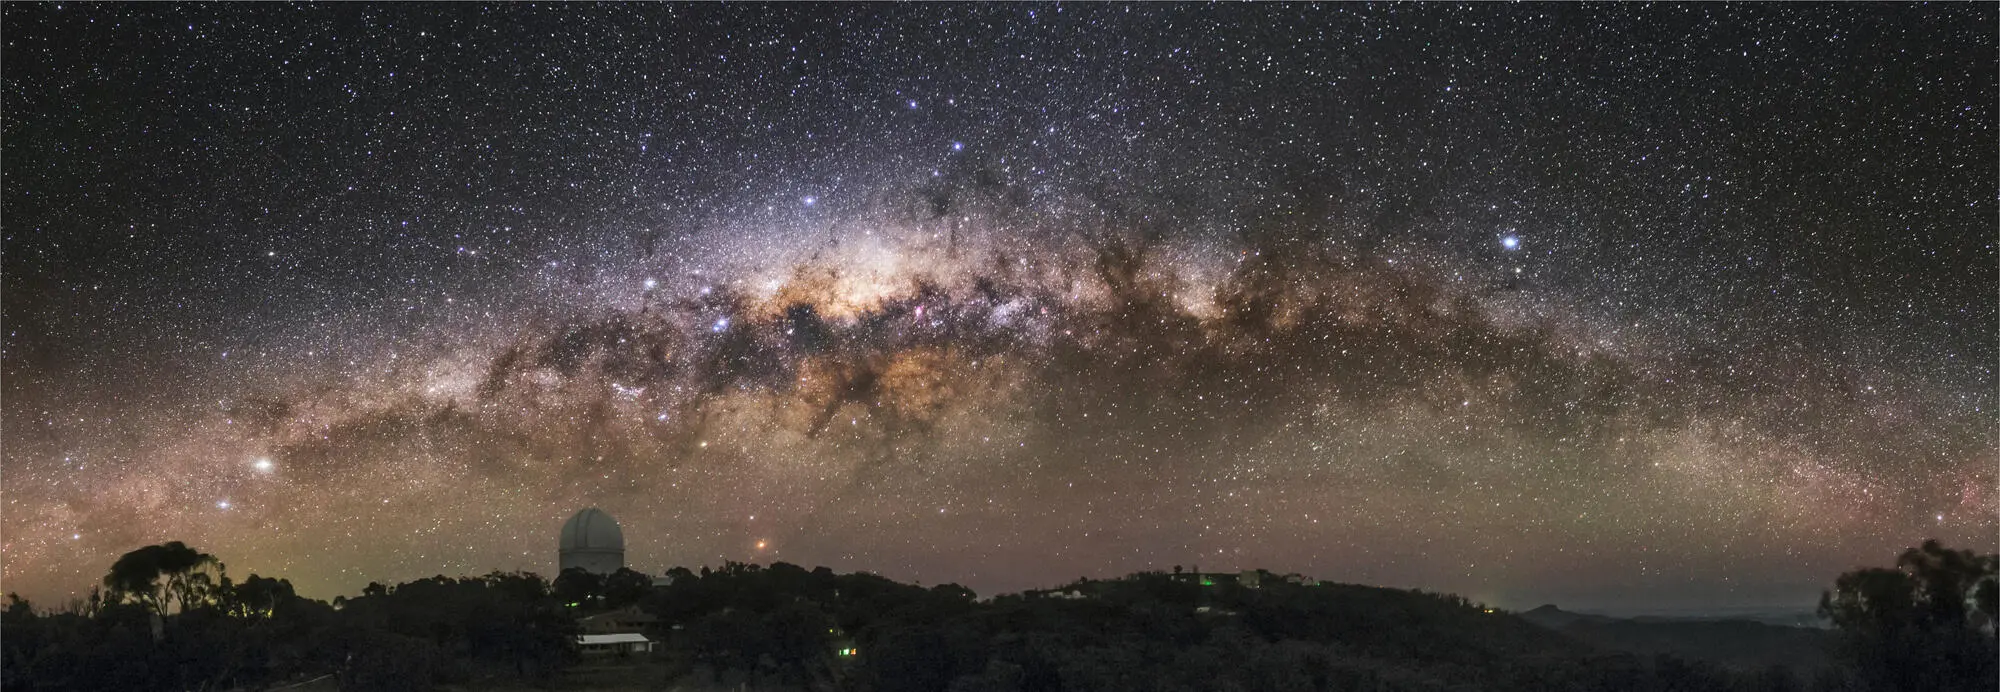 BABAK TAFRESHI SCIENCE PHOTO LIBRARY The Milky Way in the night sky over - фото 9